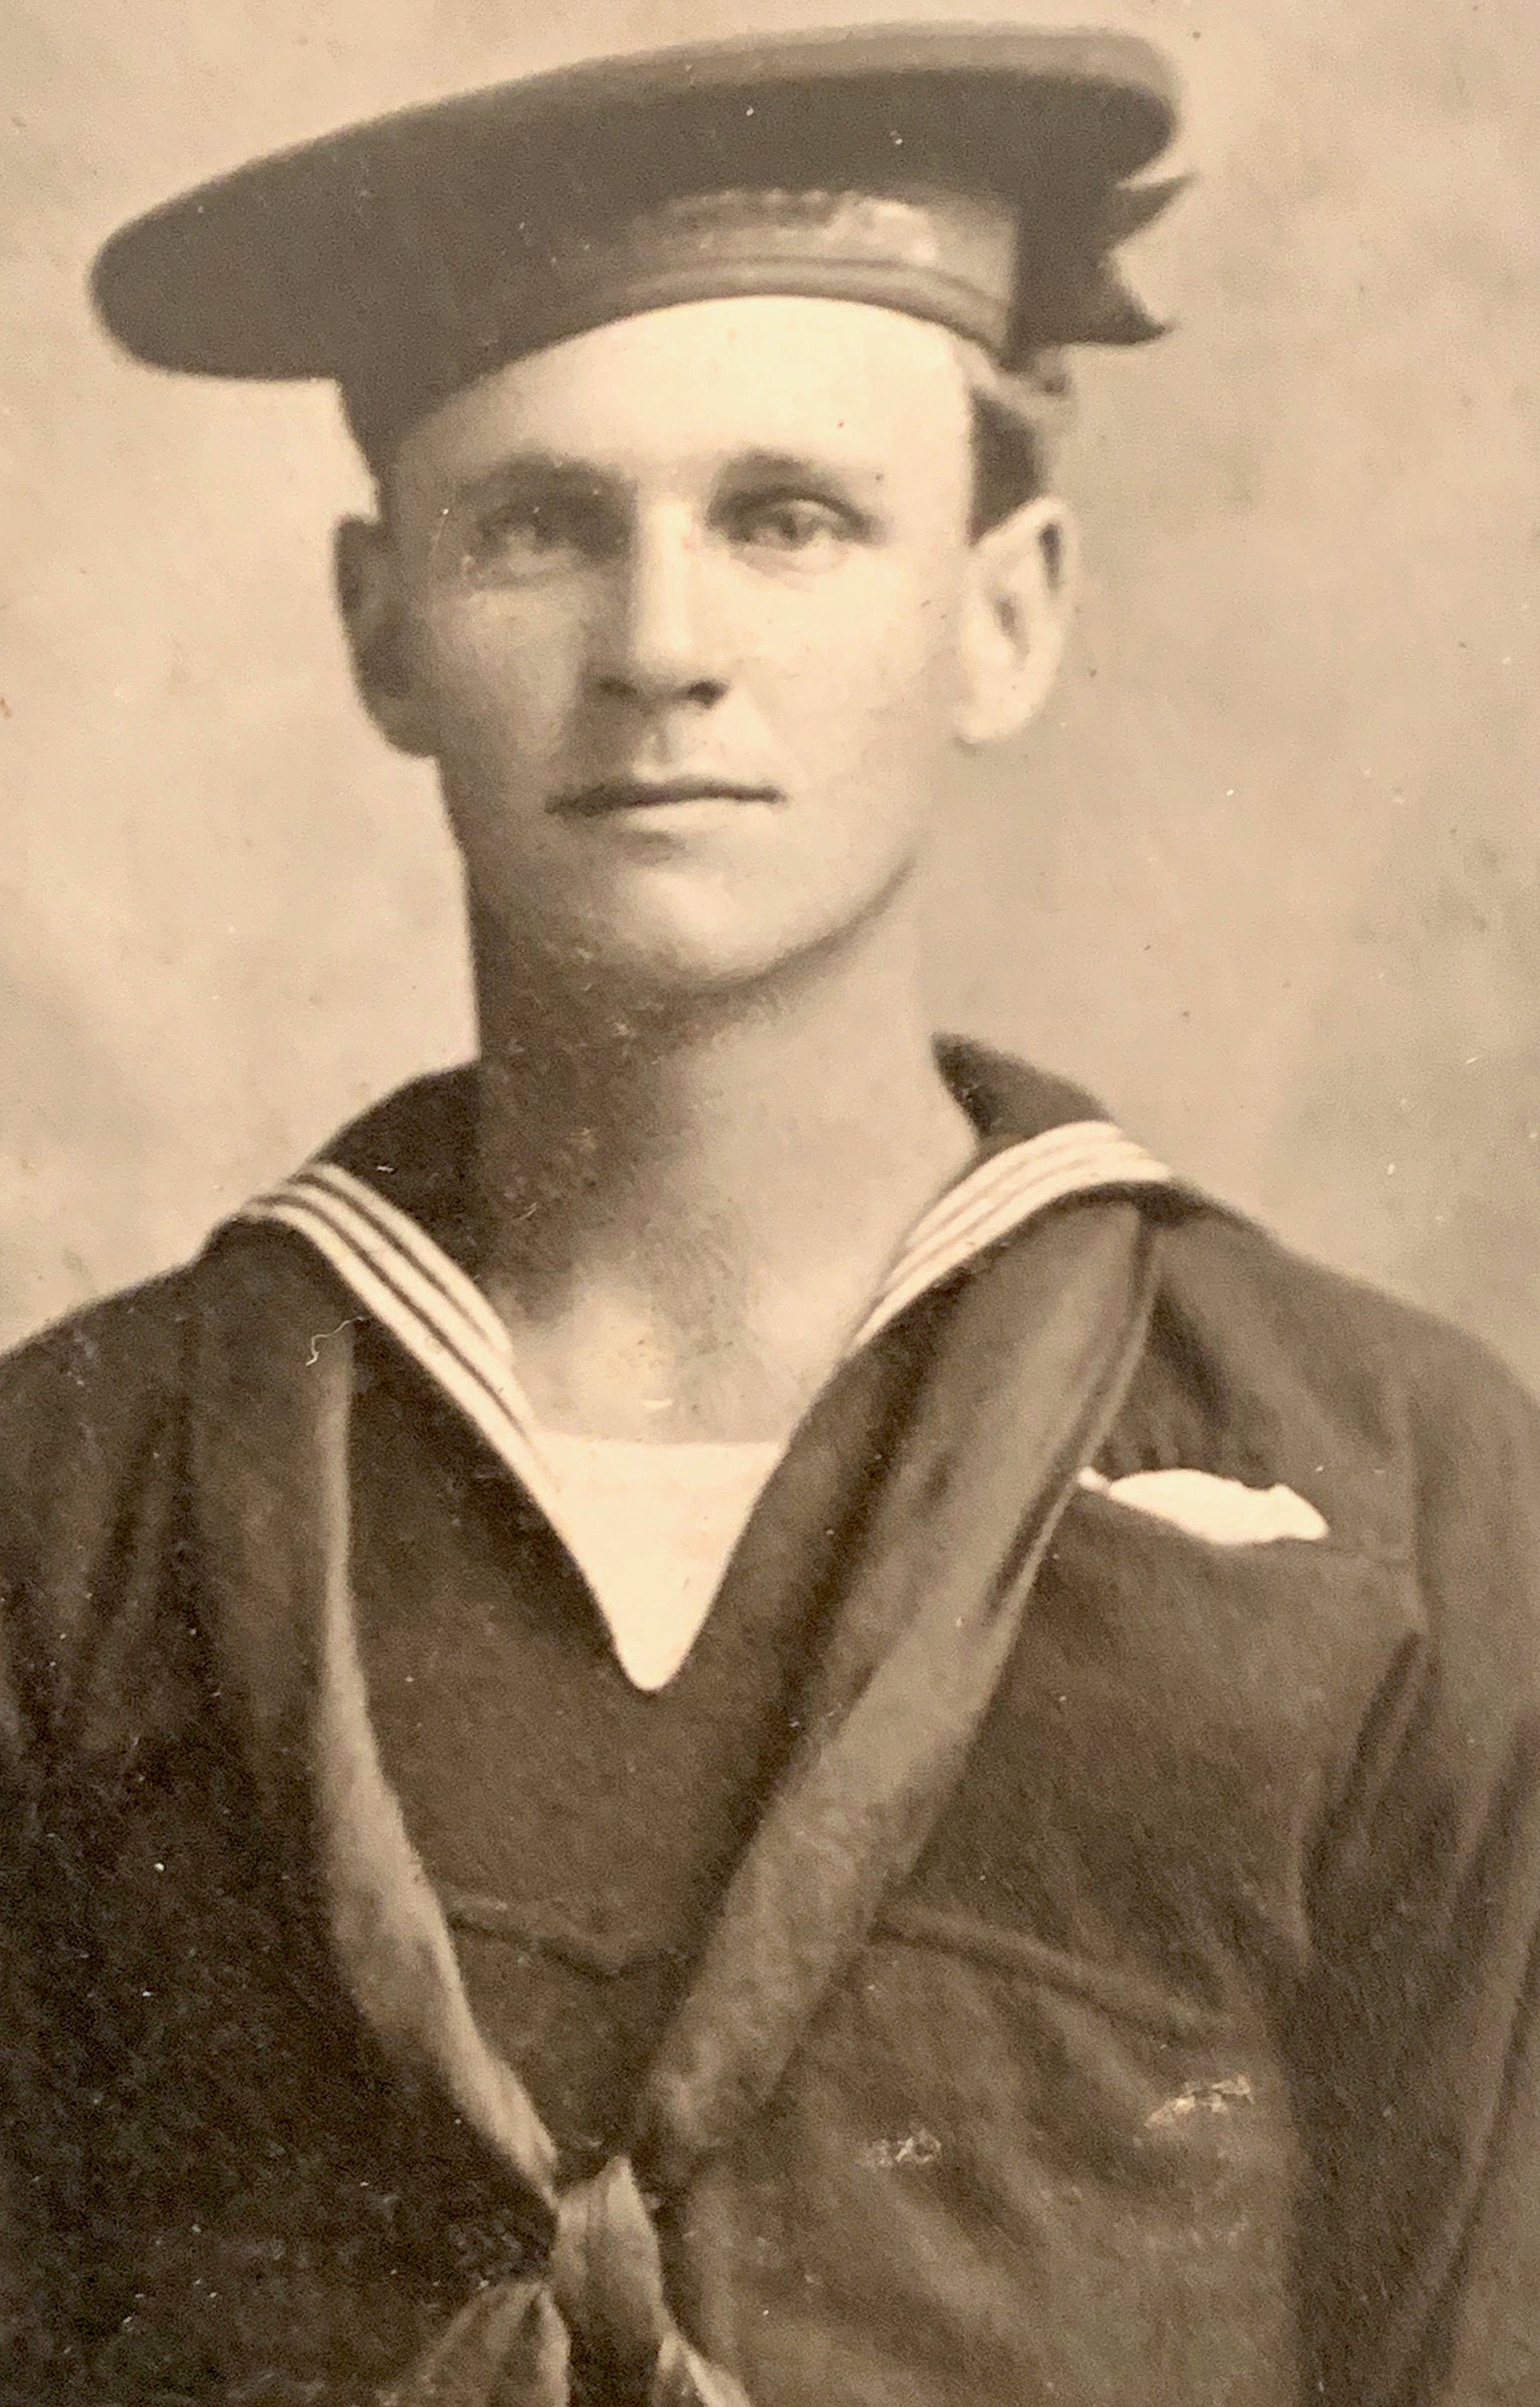 Vintage Black & White Photograph, Portrait of Young Man in Navy Uniform Sailor, Imperial Studio 22 Tremont Row Boston, MA